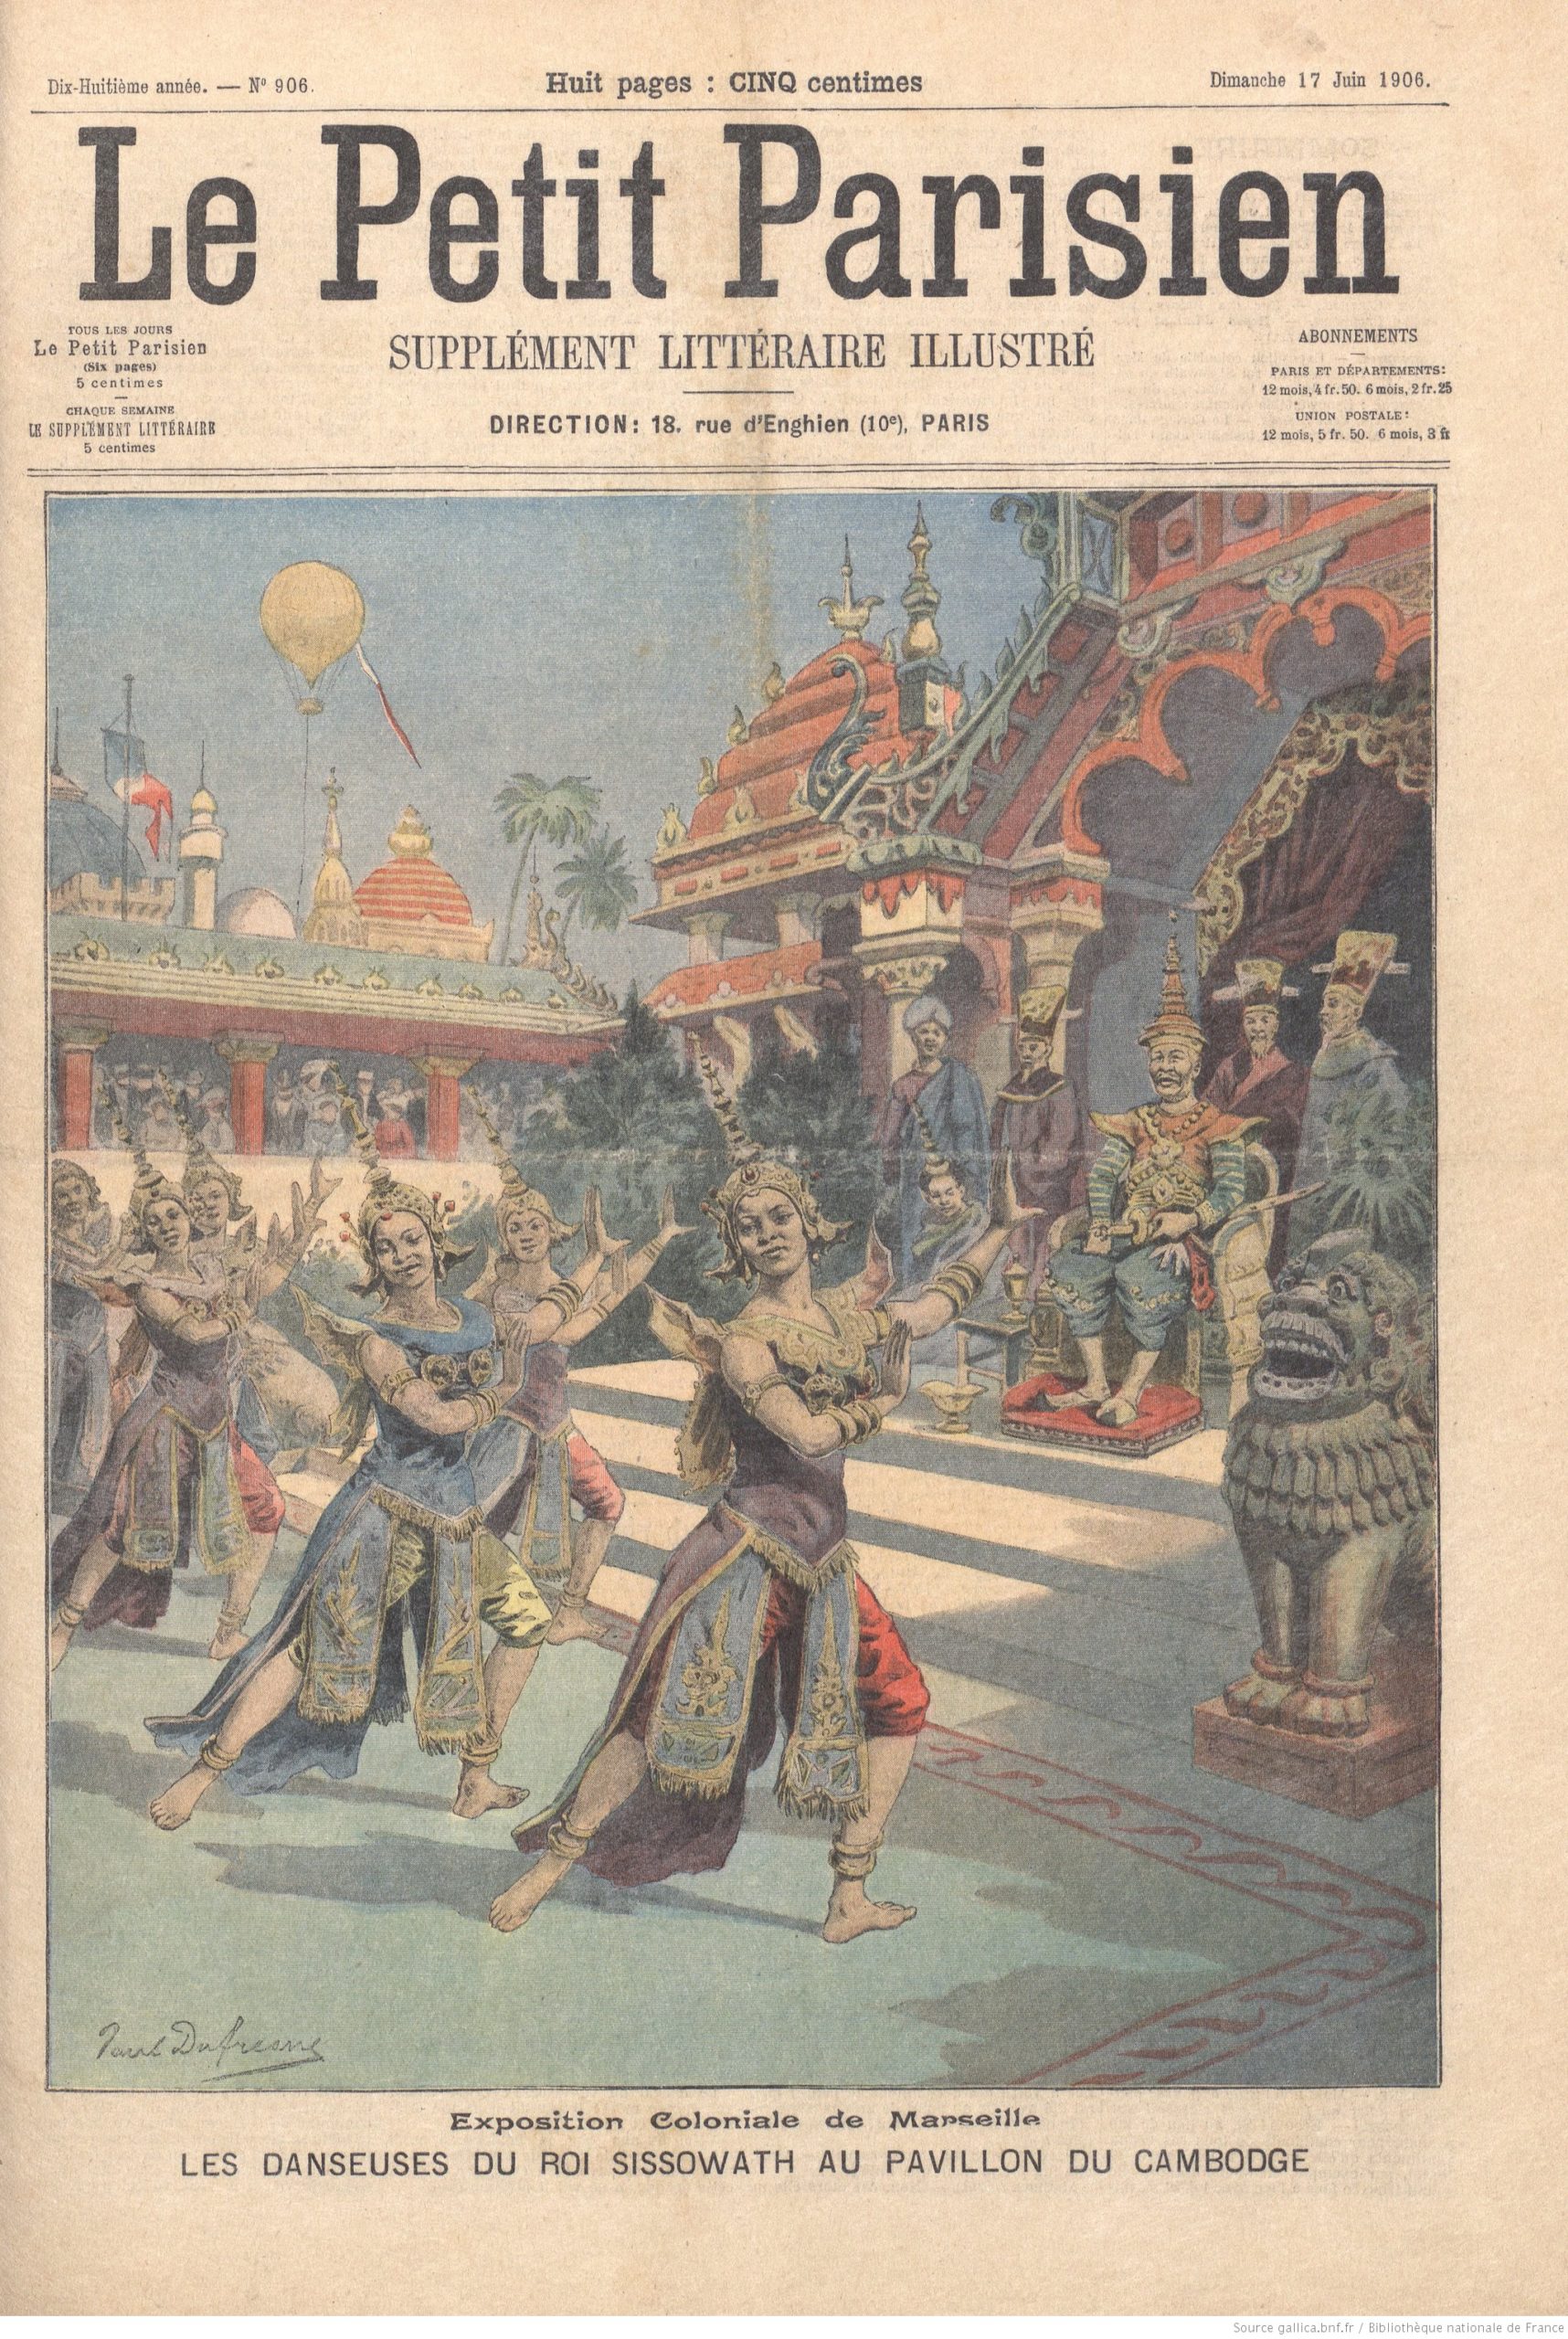 Cambodian dancers at the Colonial Exposition, Illustration for Le Petit Parisien, June 17, 1906